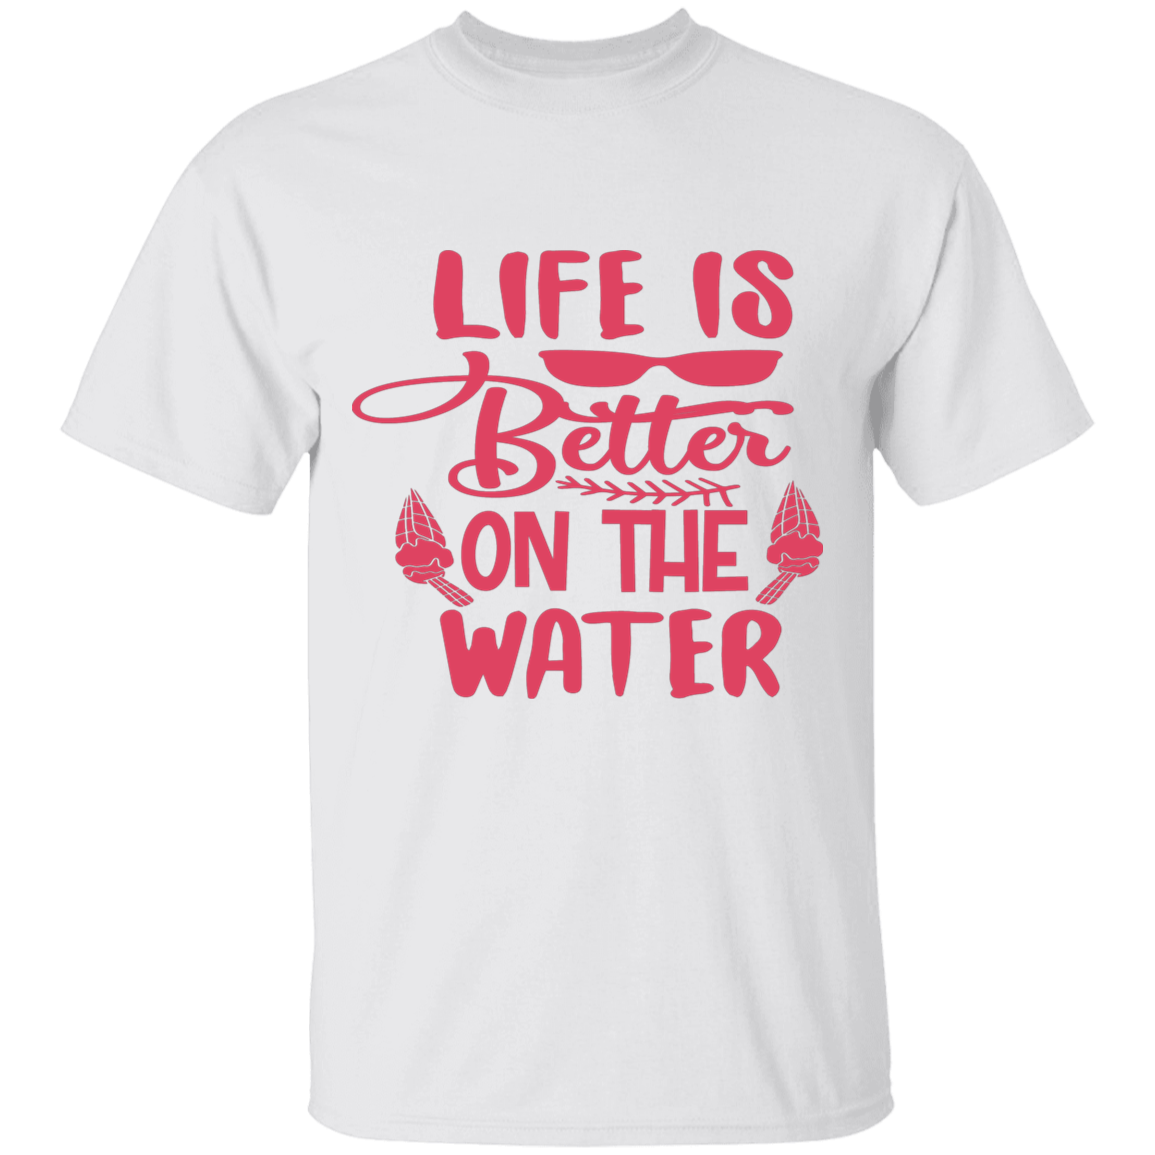 Life's better water T-Shirt (r)